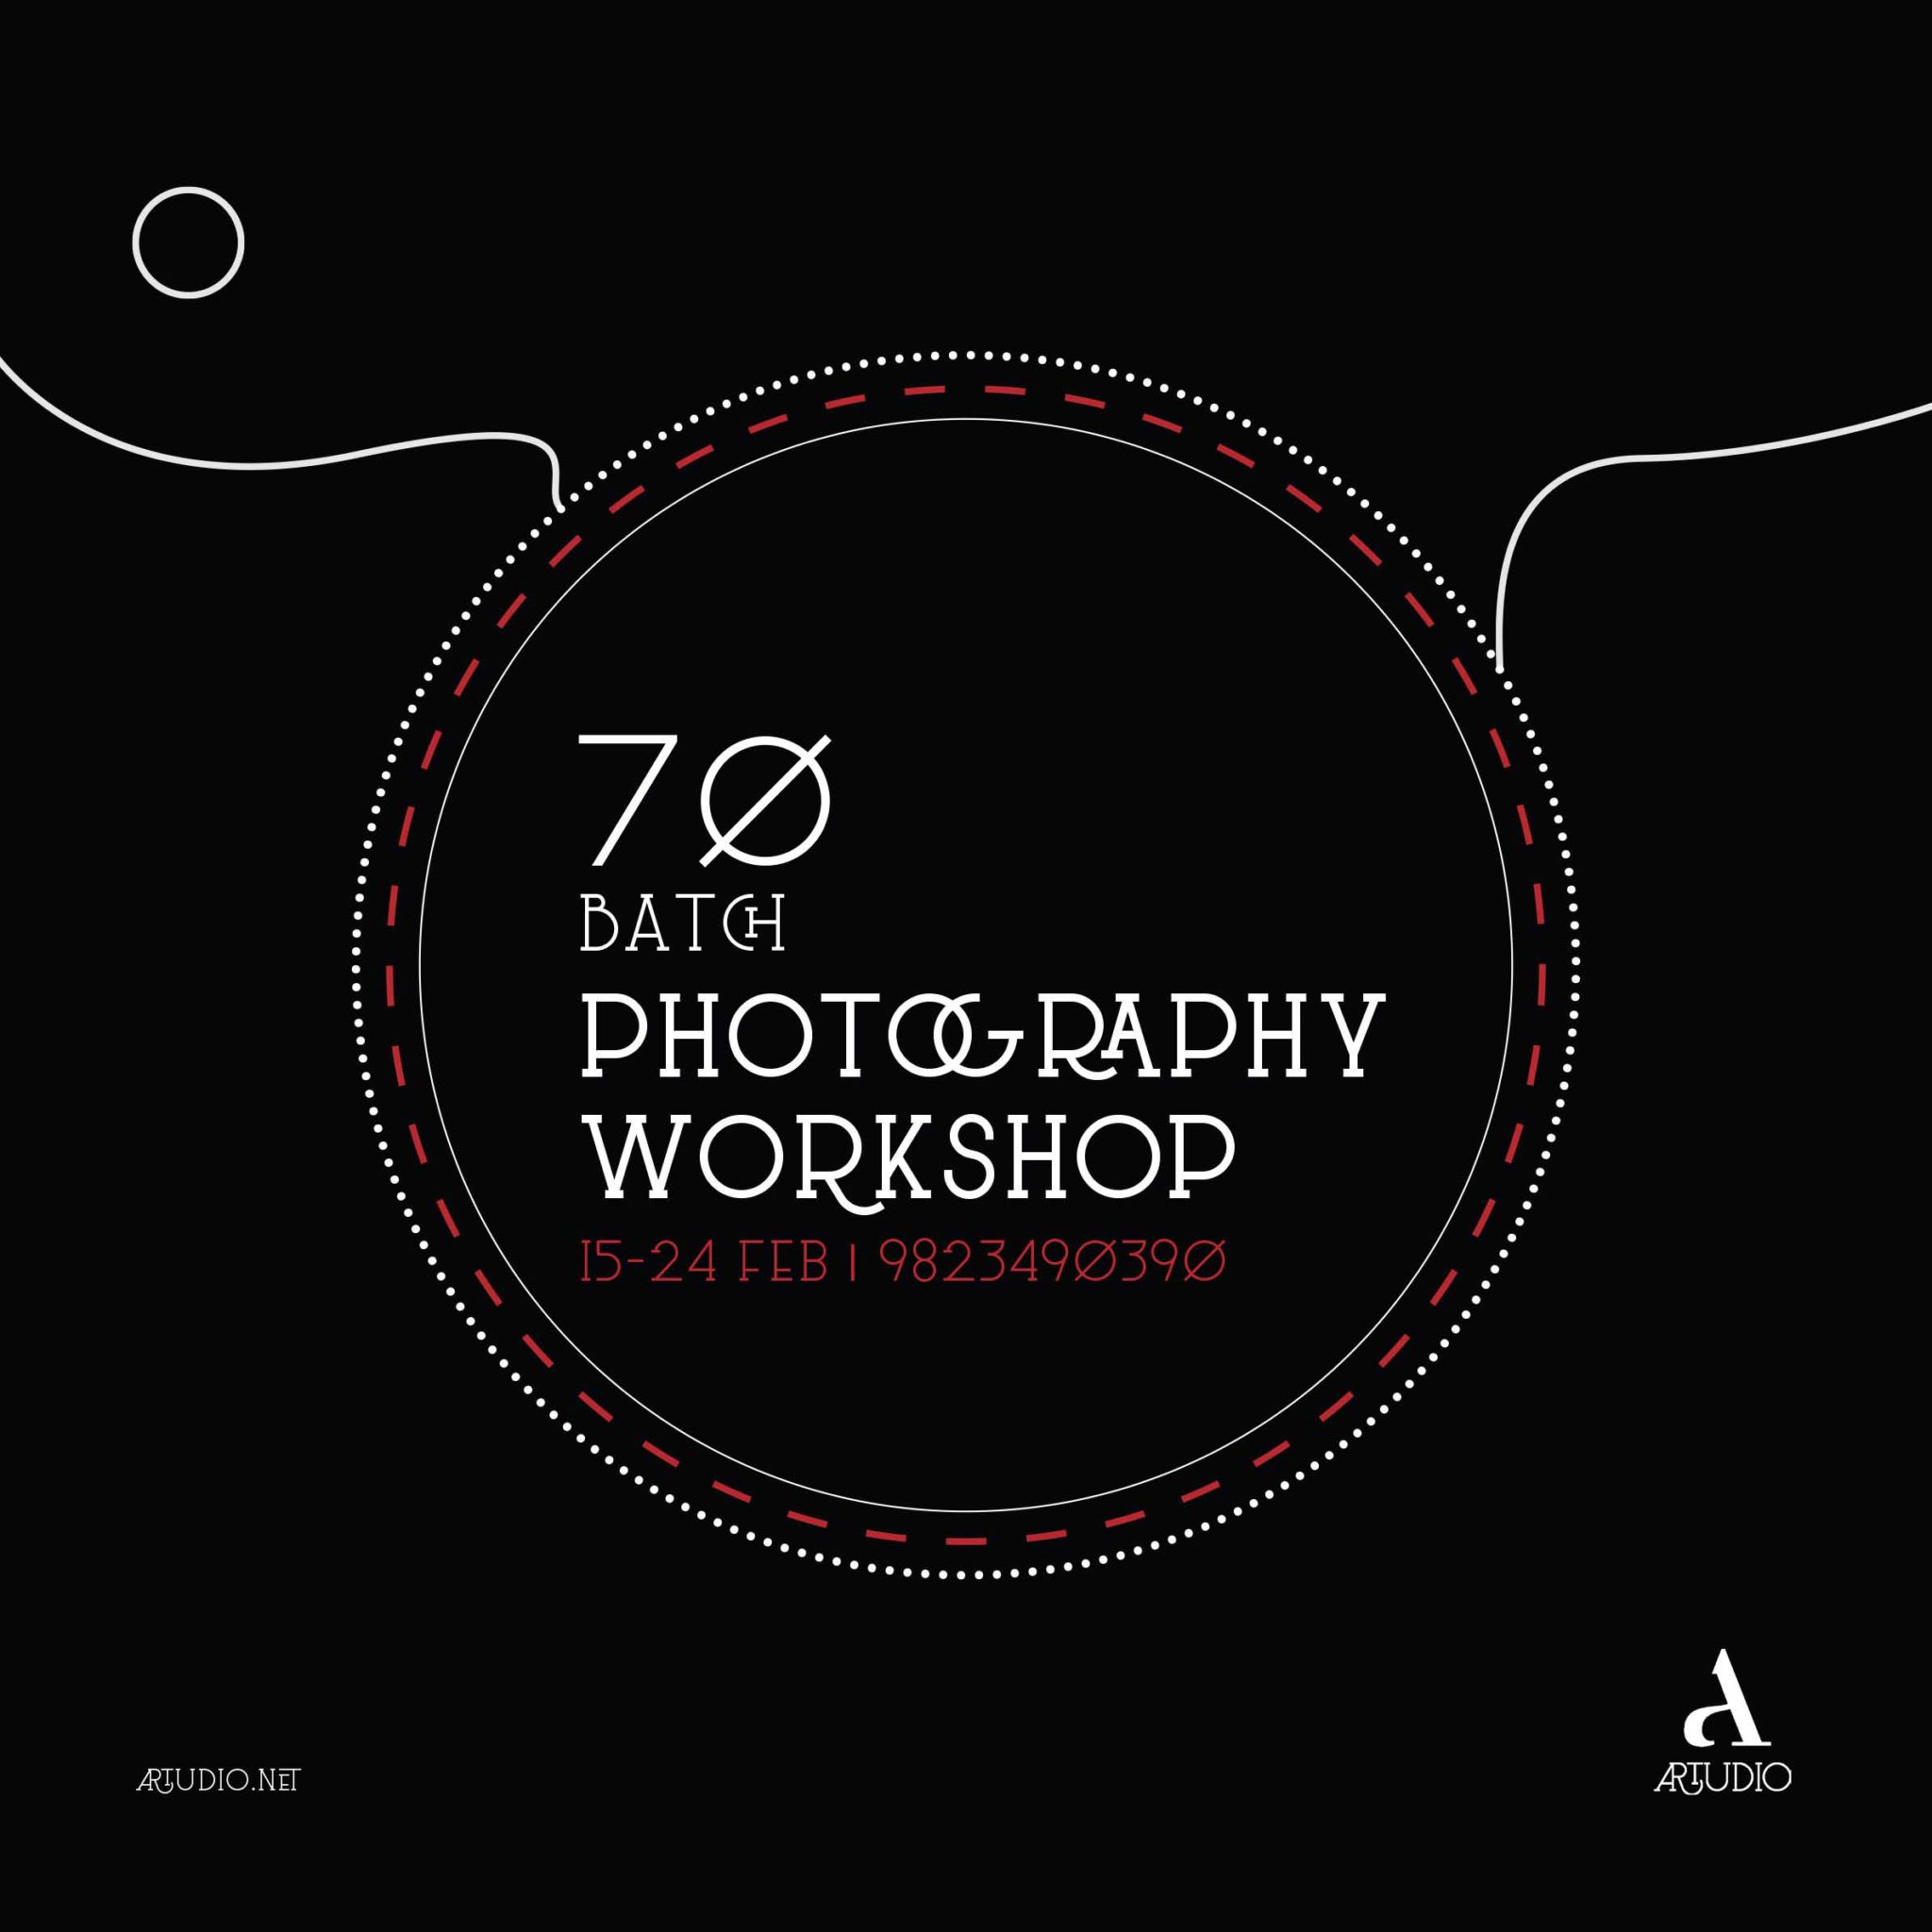 Photography Workshop 70th Batch [Registration Open] post thumbnail image